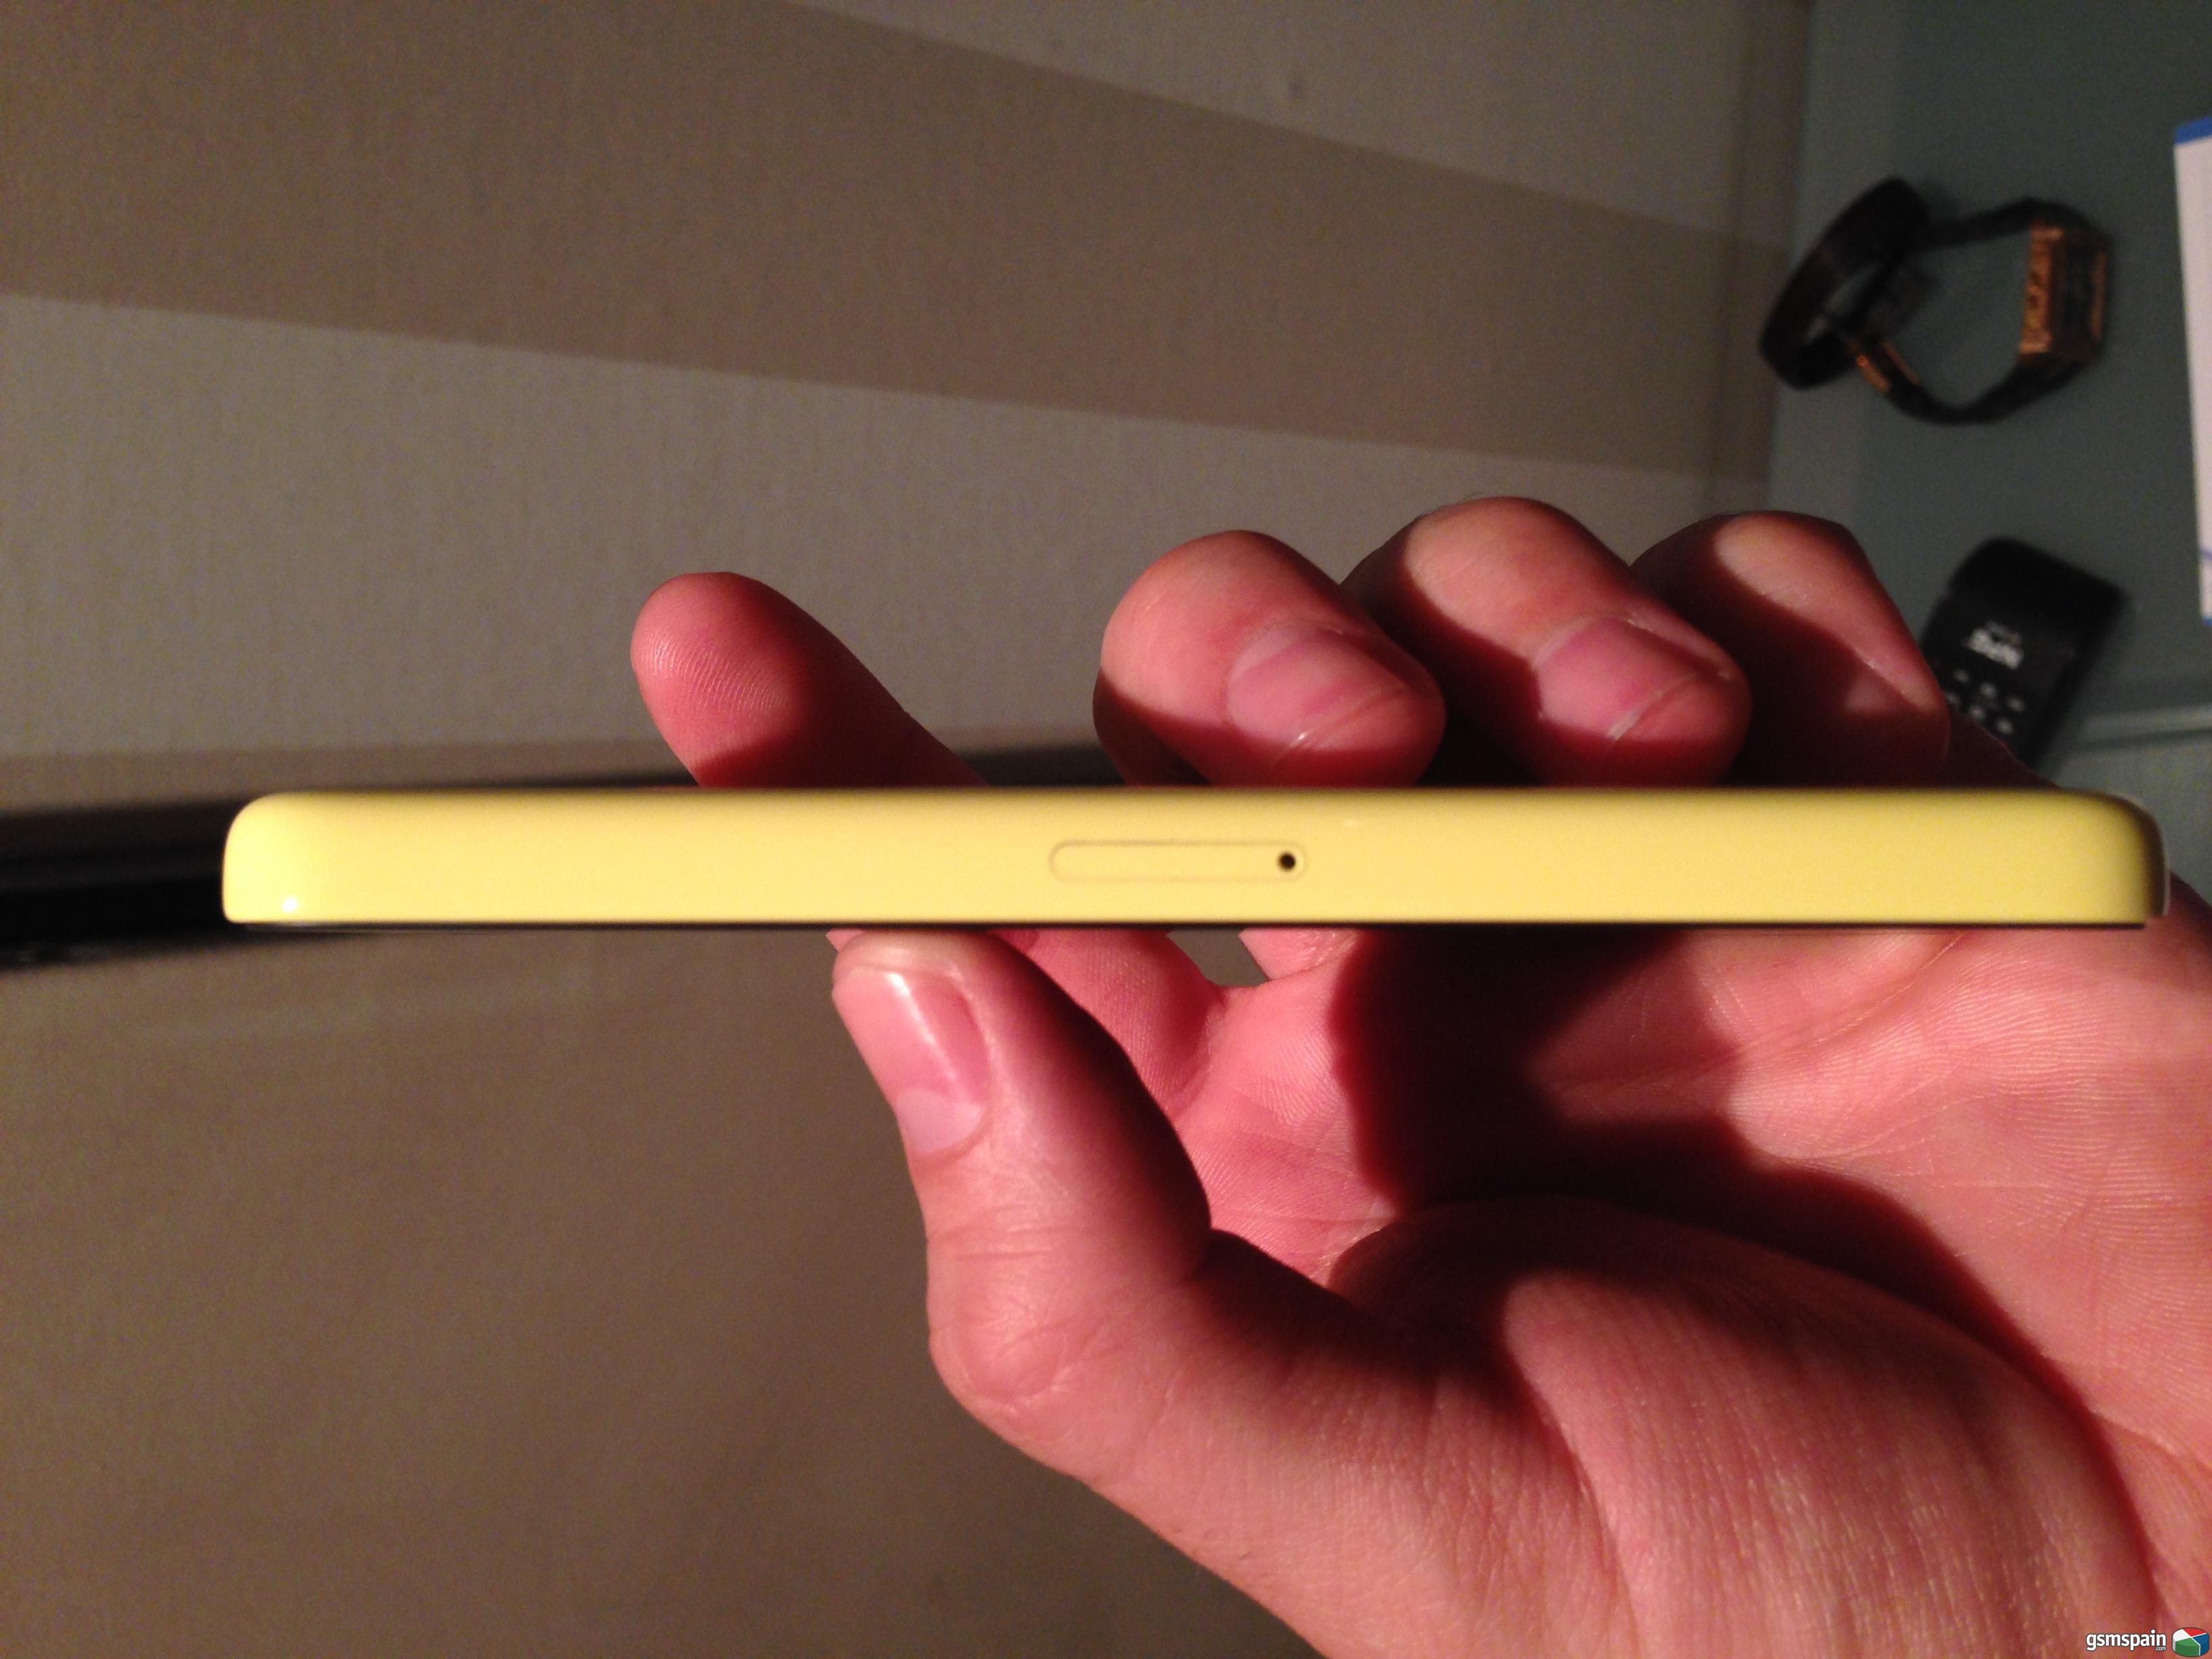 [VENDO] iPhone 5c Amarillo, libre